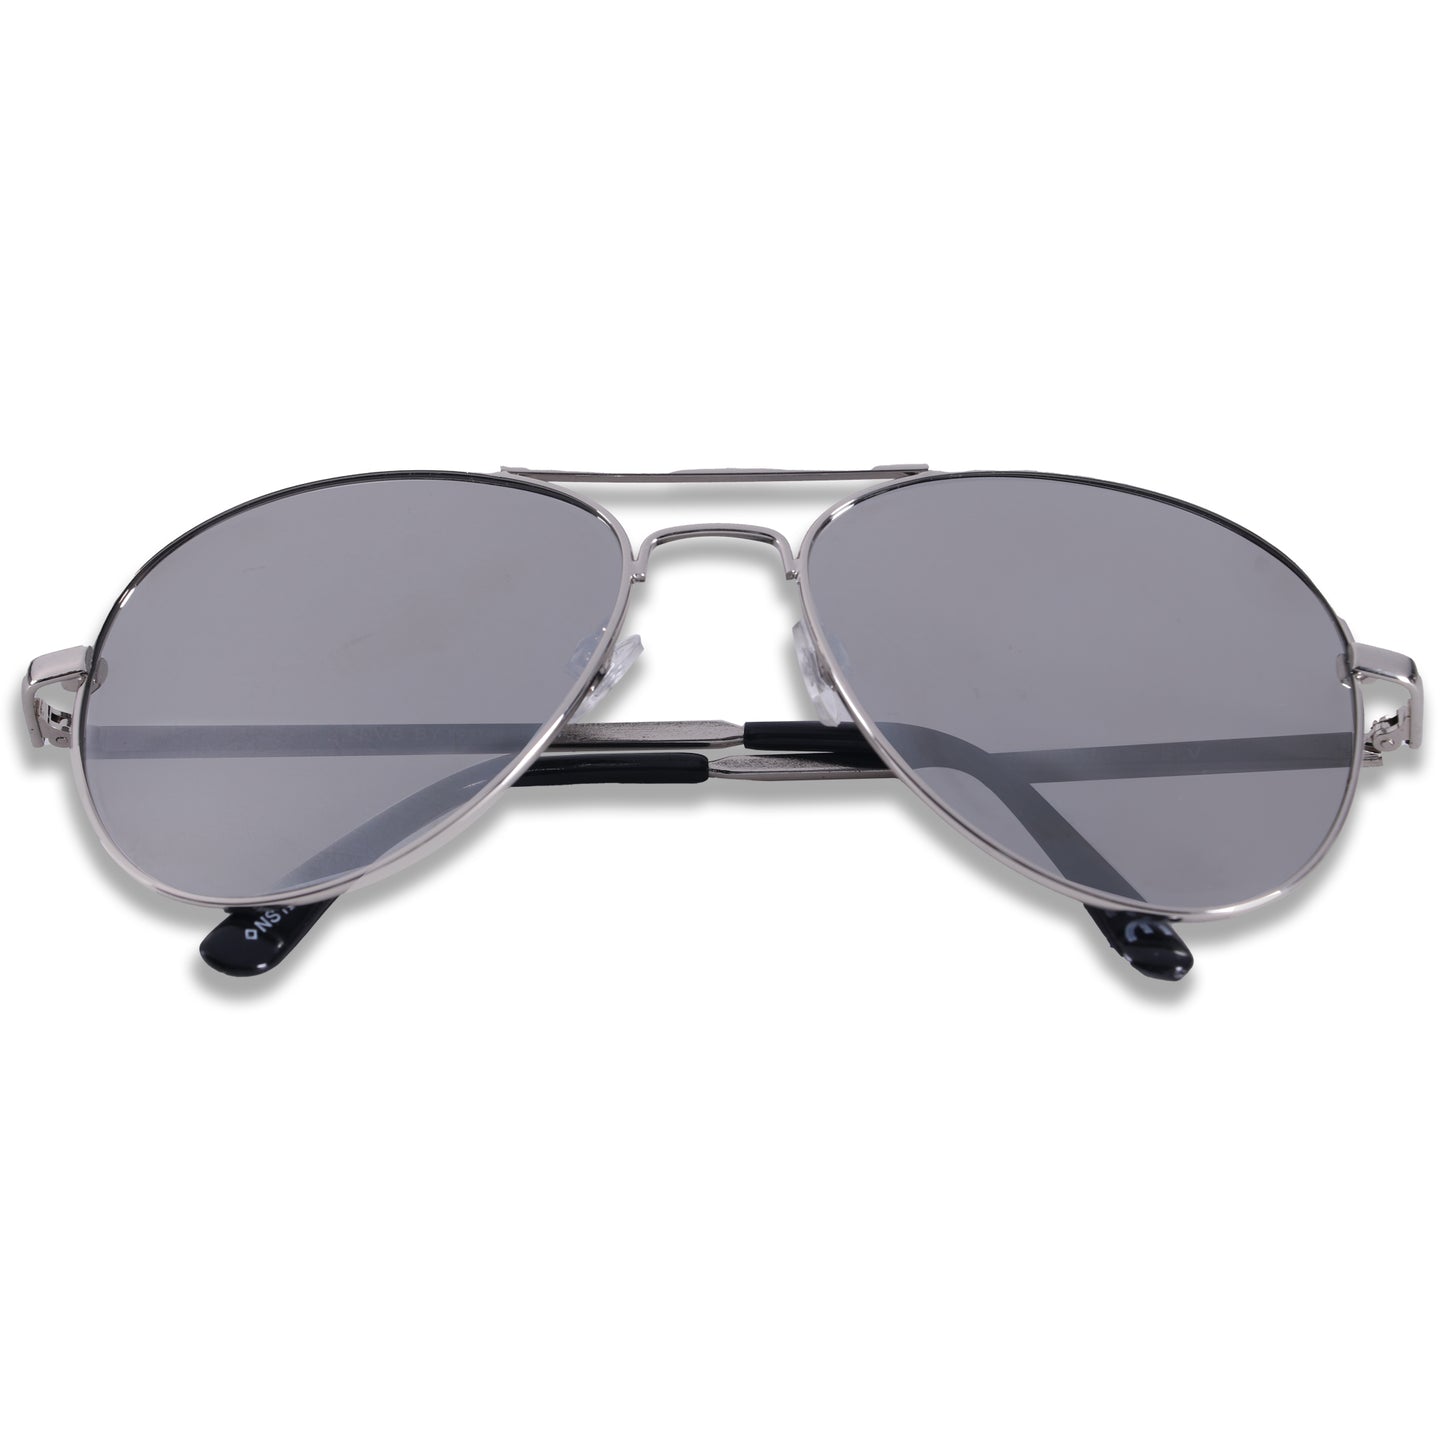 2.5 NVG UV Protected Silver Aviator Sunglasses